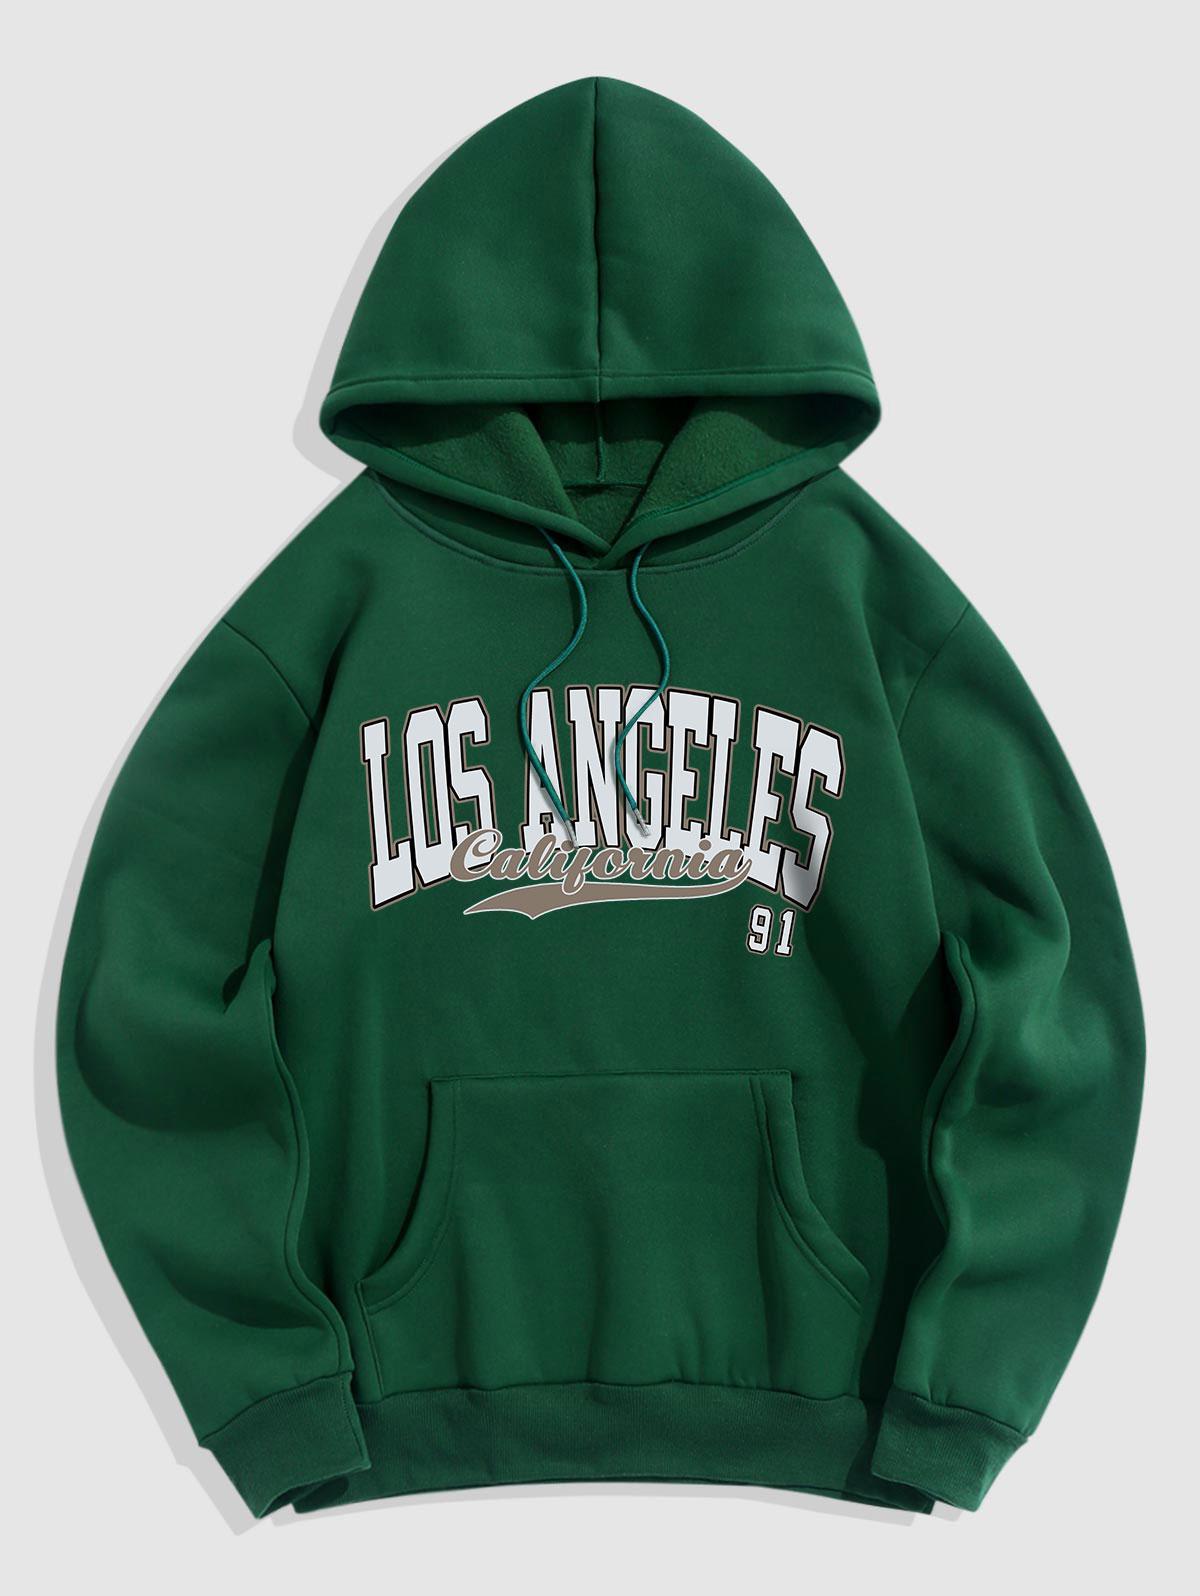 ZAFUL Men's LOS ANGELES California Letter Pattern Fleece-lined Essentials Hoodie M Deep green